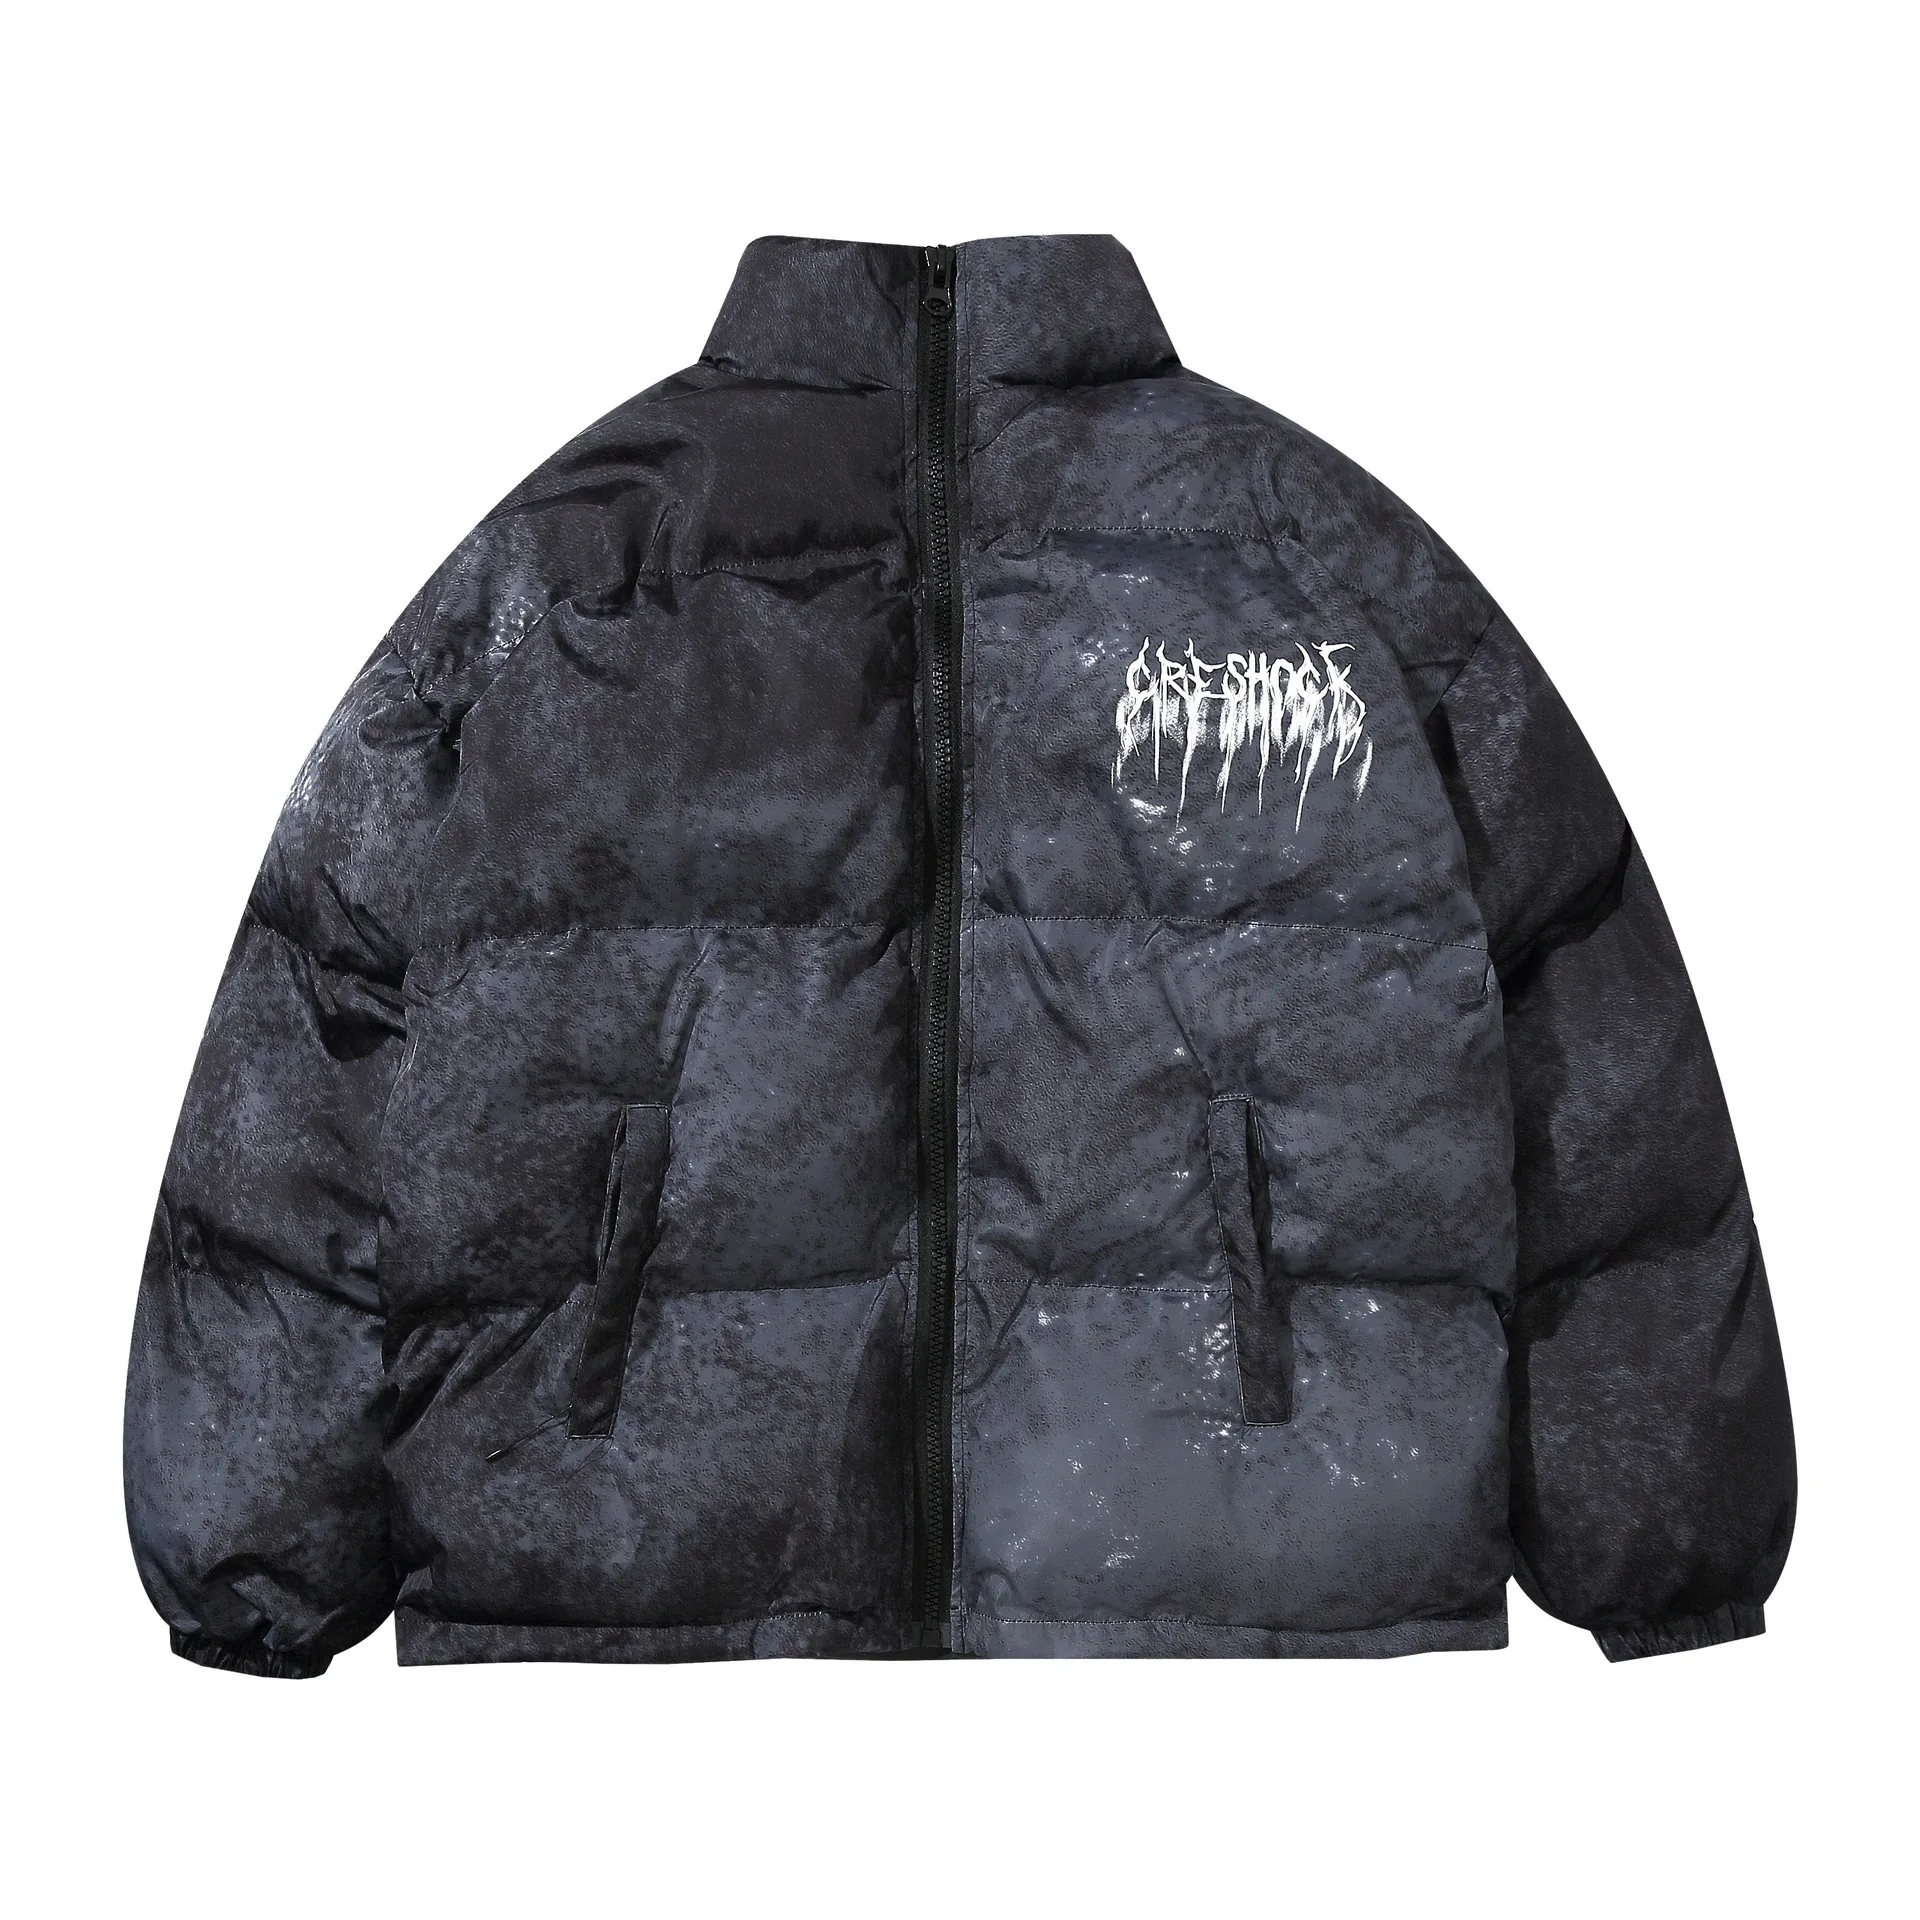 homens oversized jaqueta de inverno hip hop tie dye print engrossar parkas casal gola prova de vento quente rua acolchoado casaco